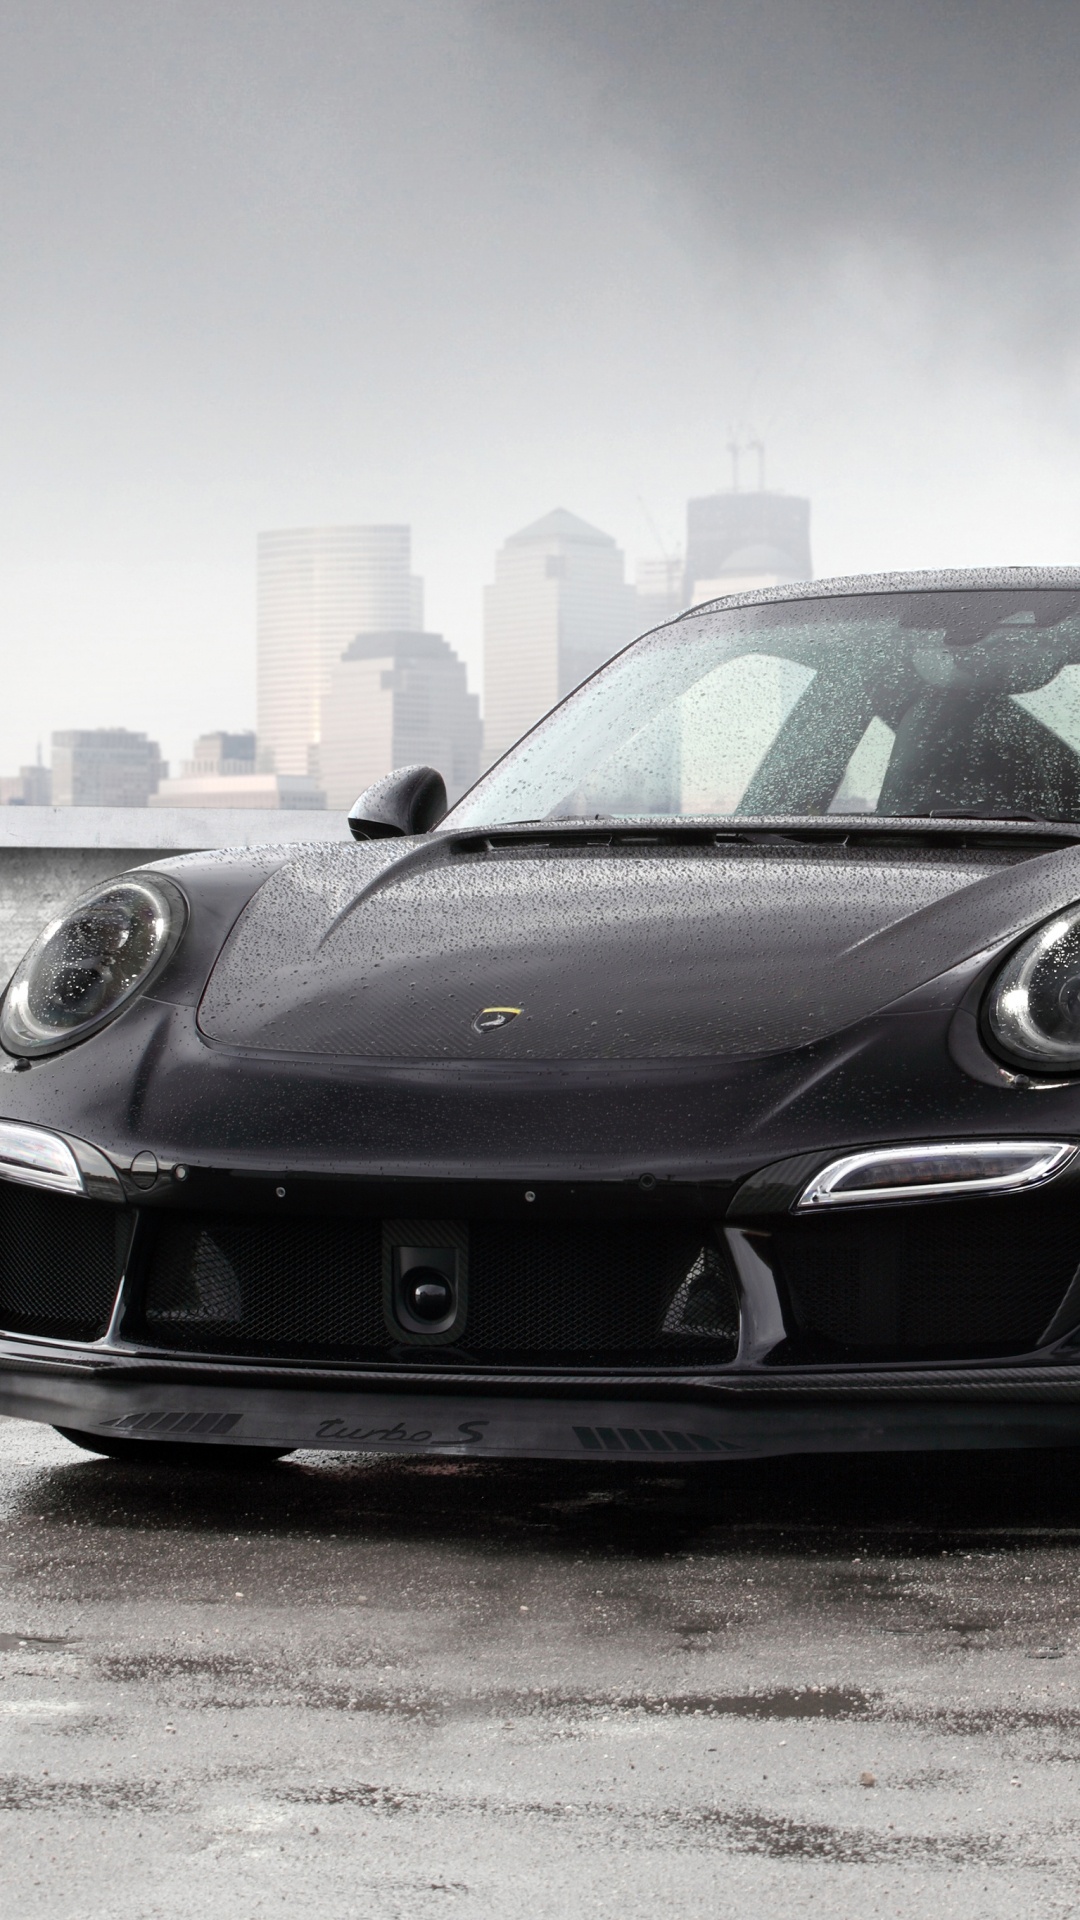 Porsche 911 Negro en la Carretera. Wallpaper in 1080x1920 Resolution